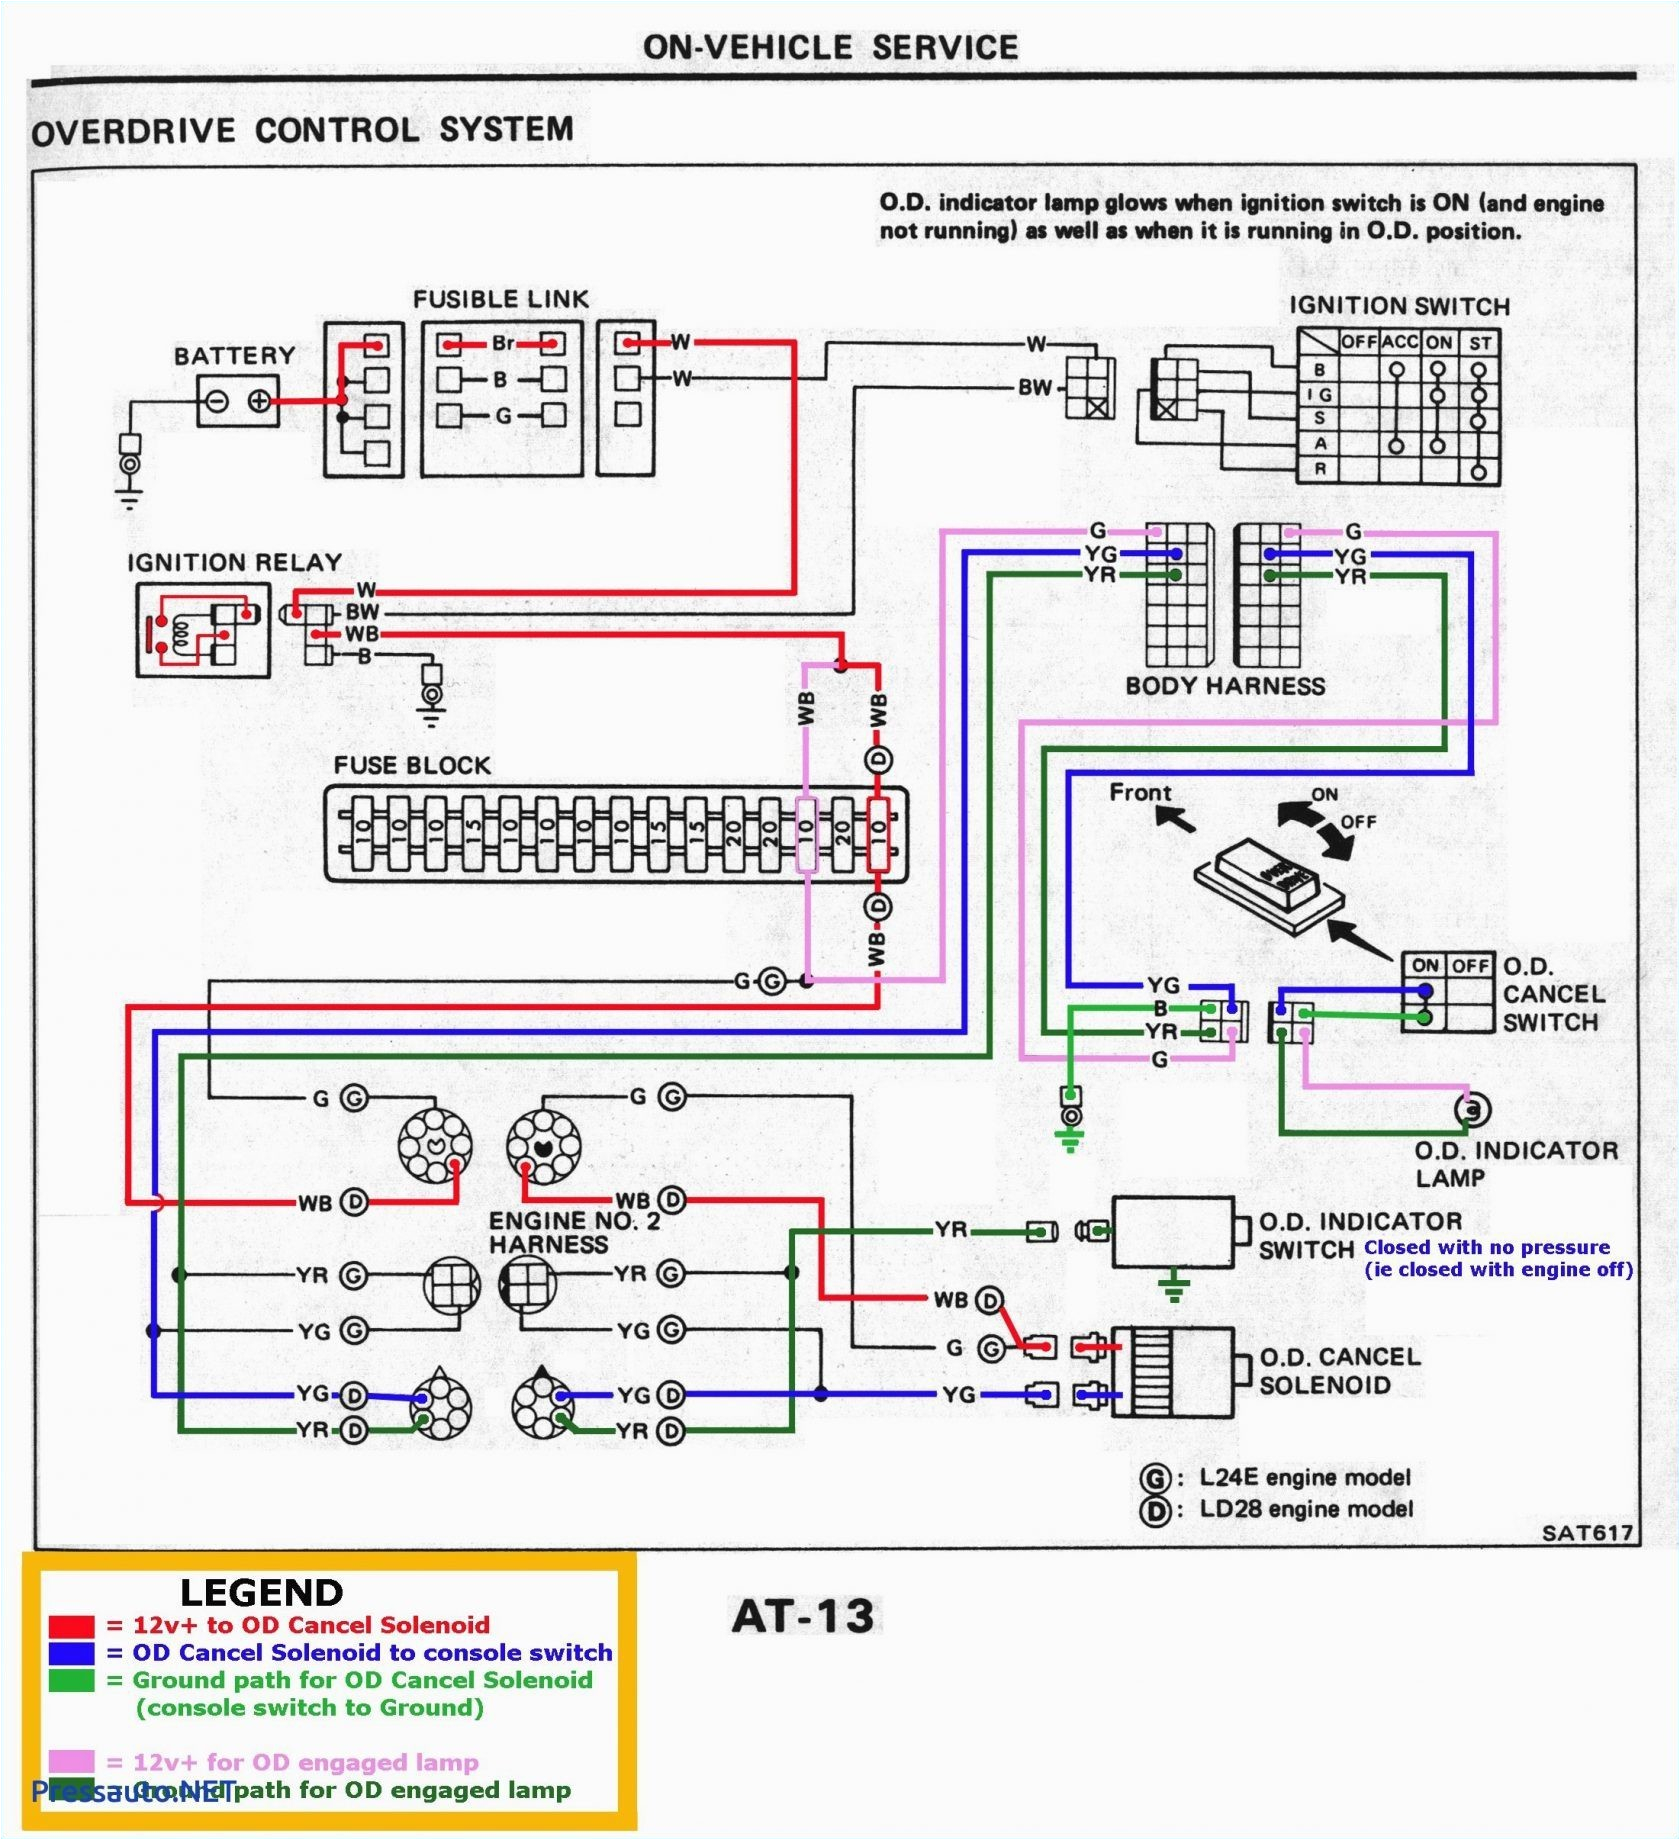 2003 Dodge Caravan Wiring Diagram 2003 Dodge Grand Caravan Fuse Panel Diagram Wiring Diagram Used